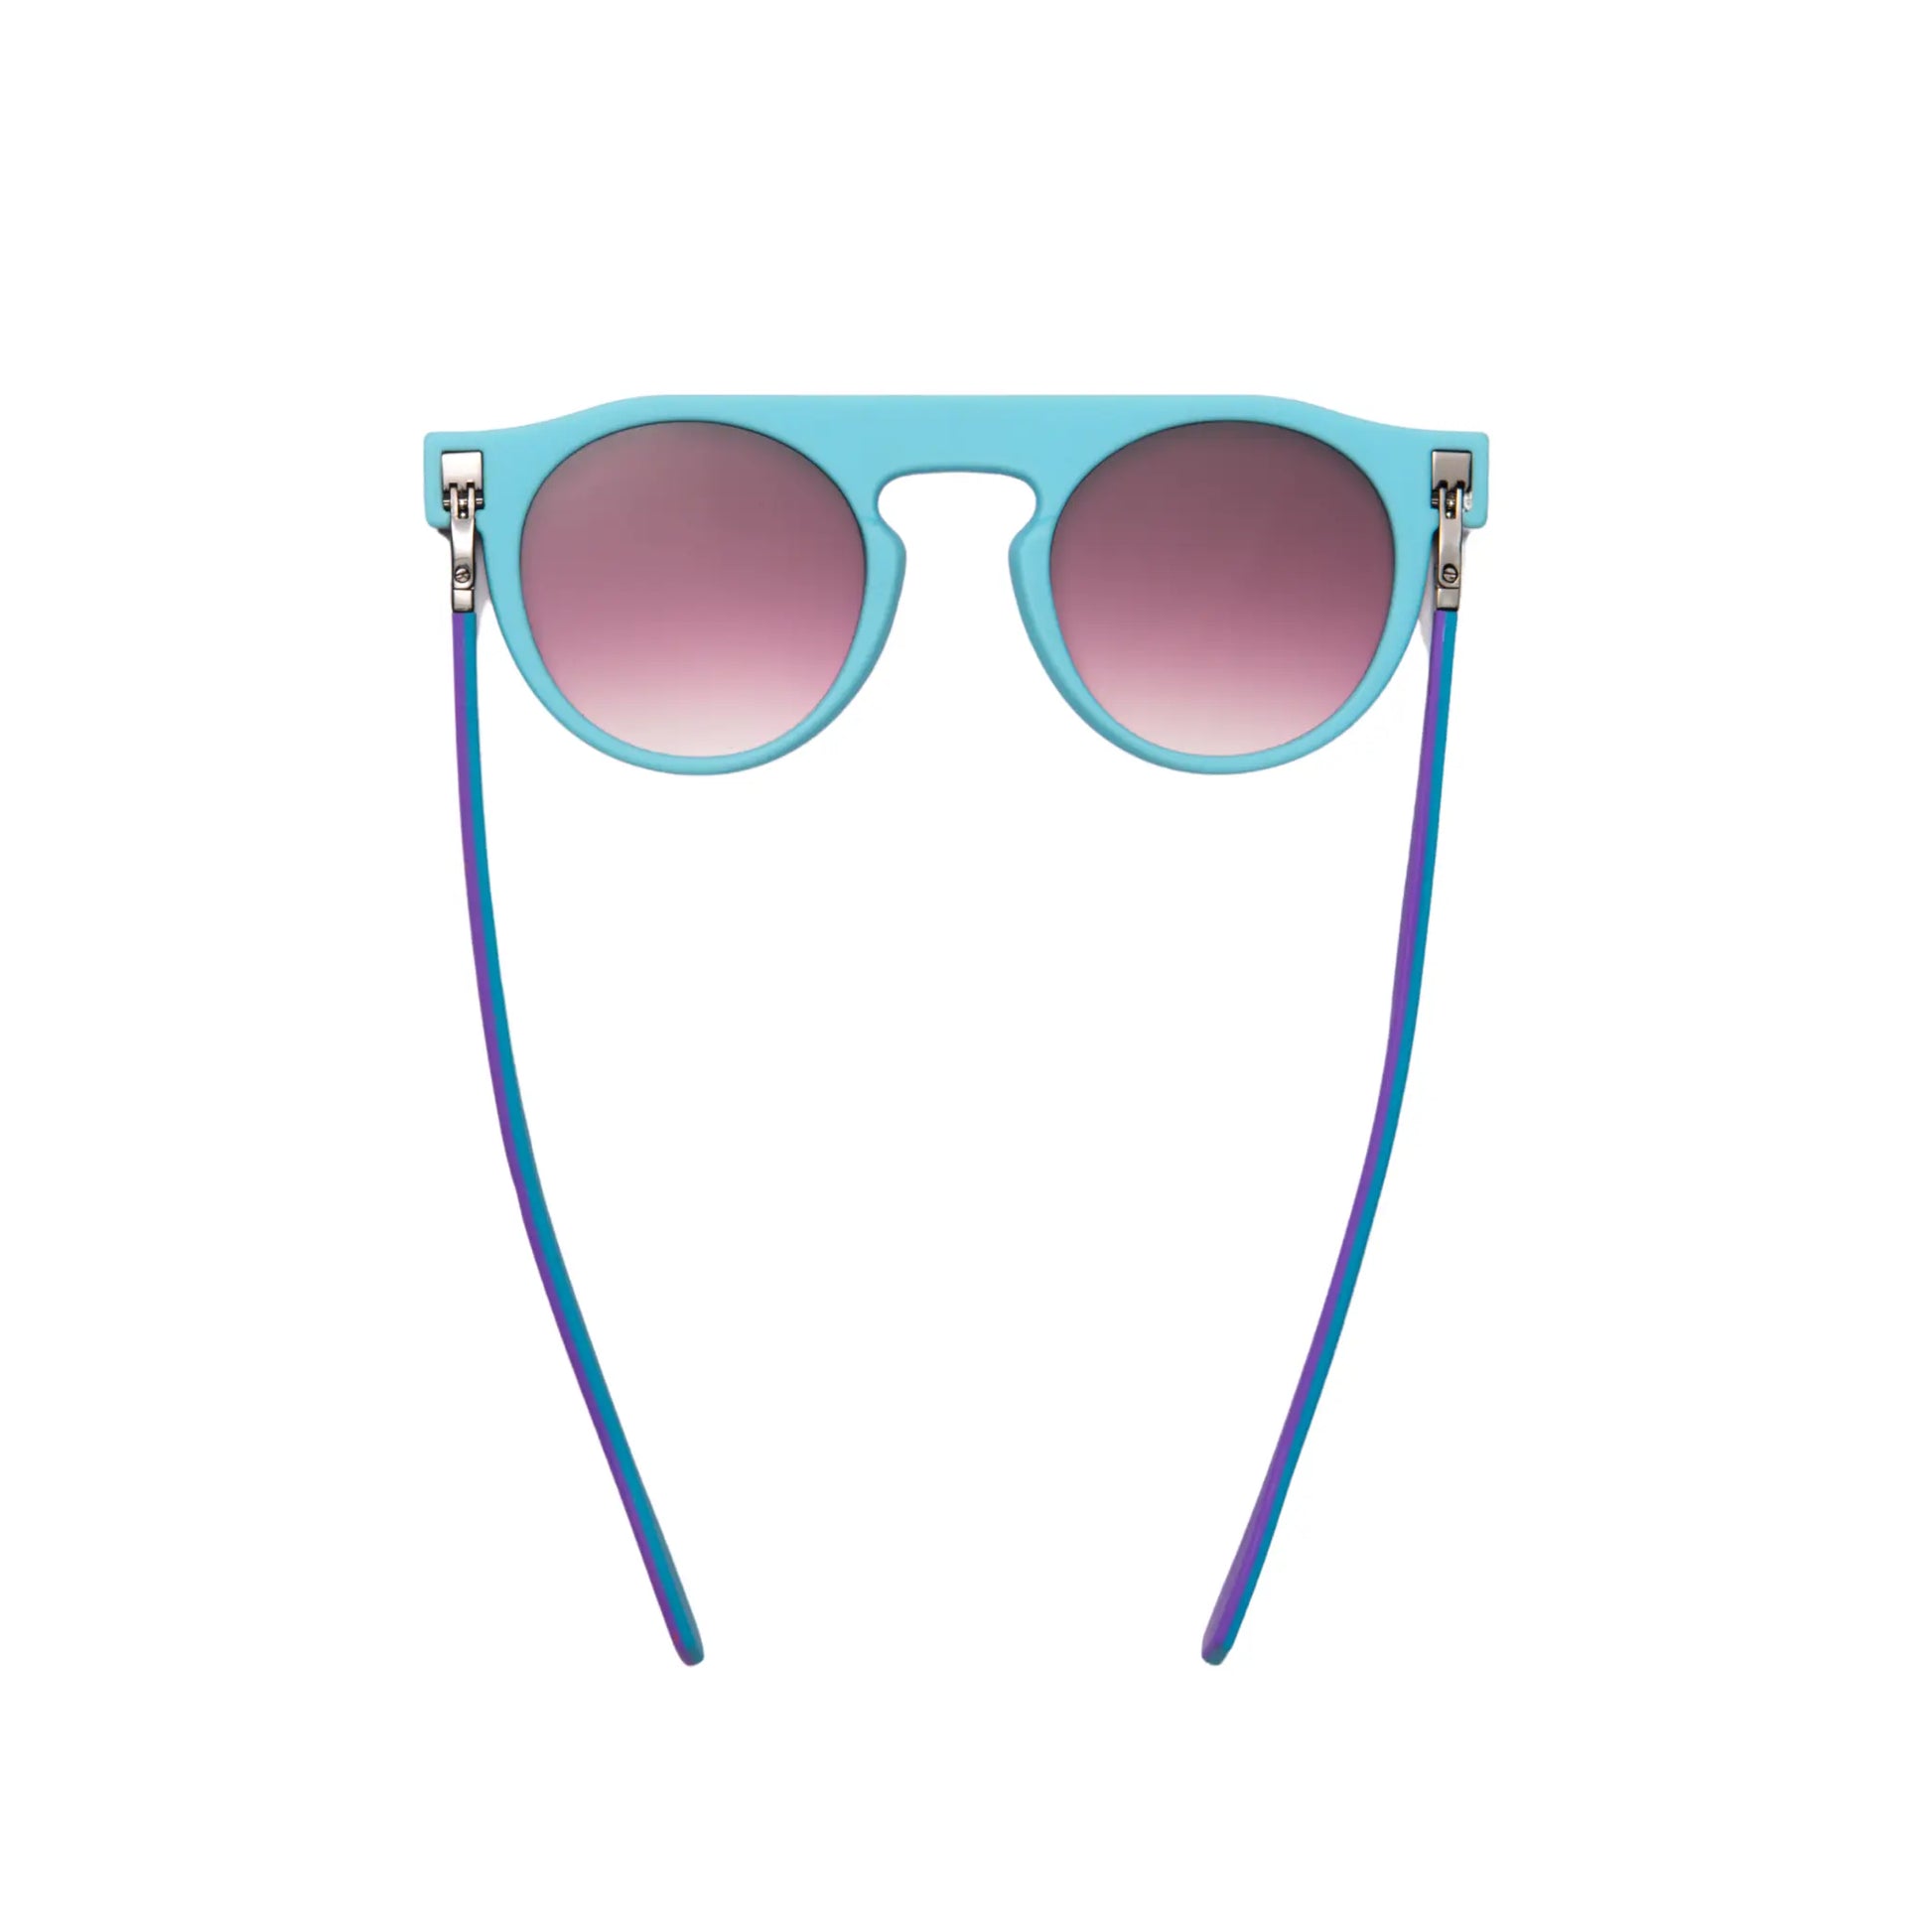 Reverso sunglasses violet & tiffany blue reversible & ultra light top view